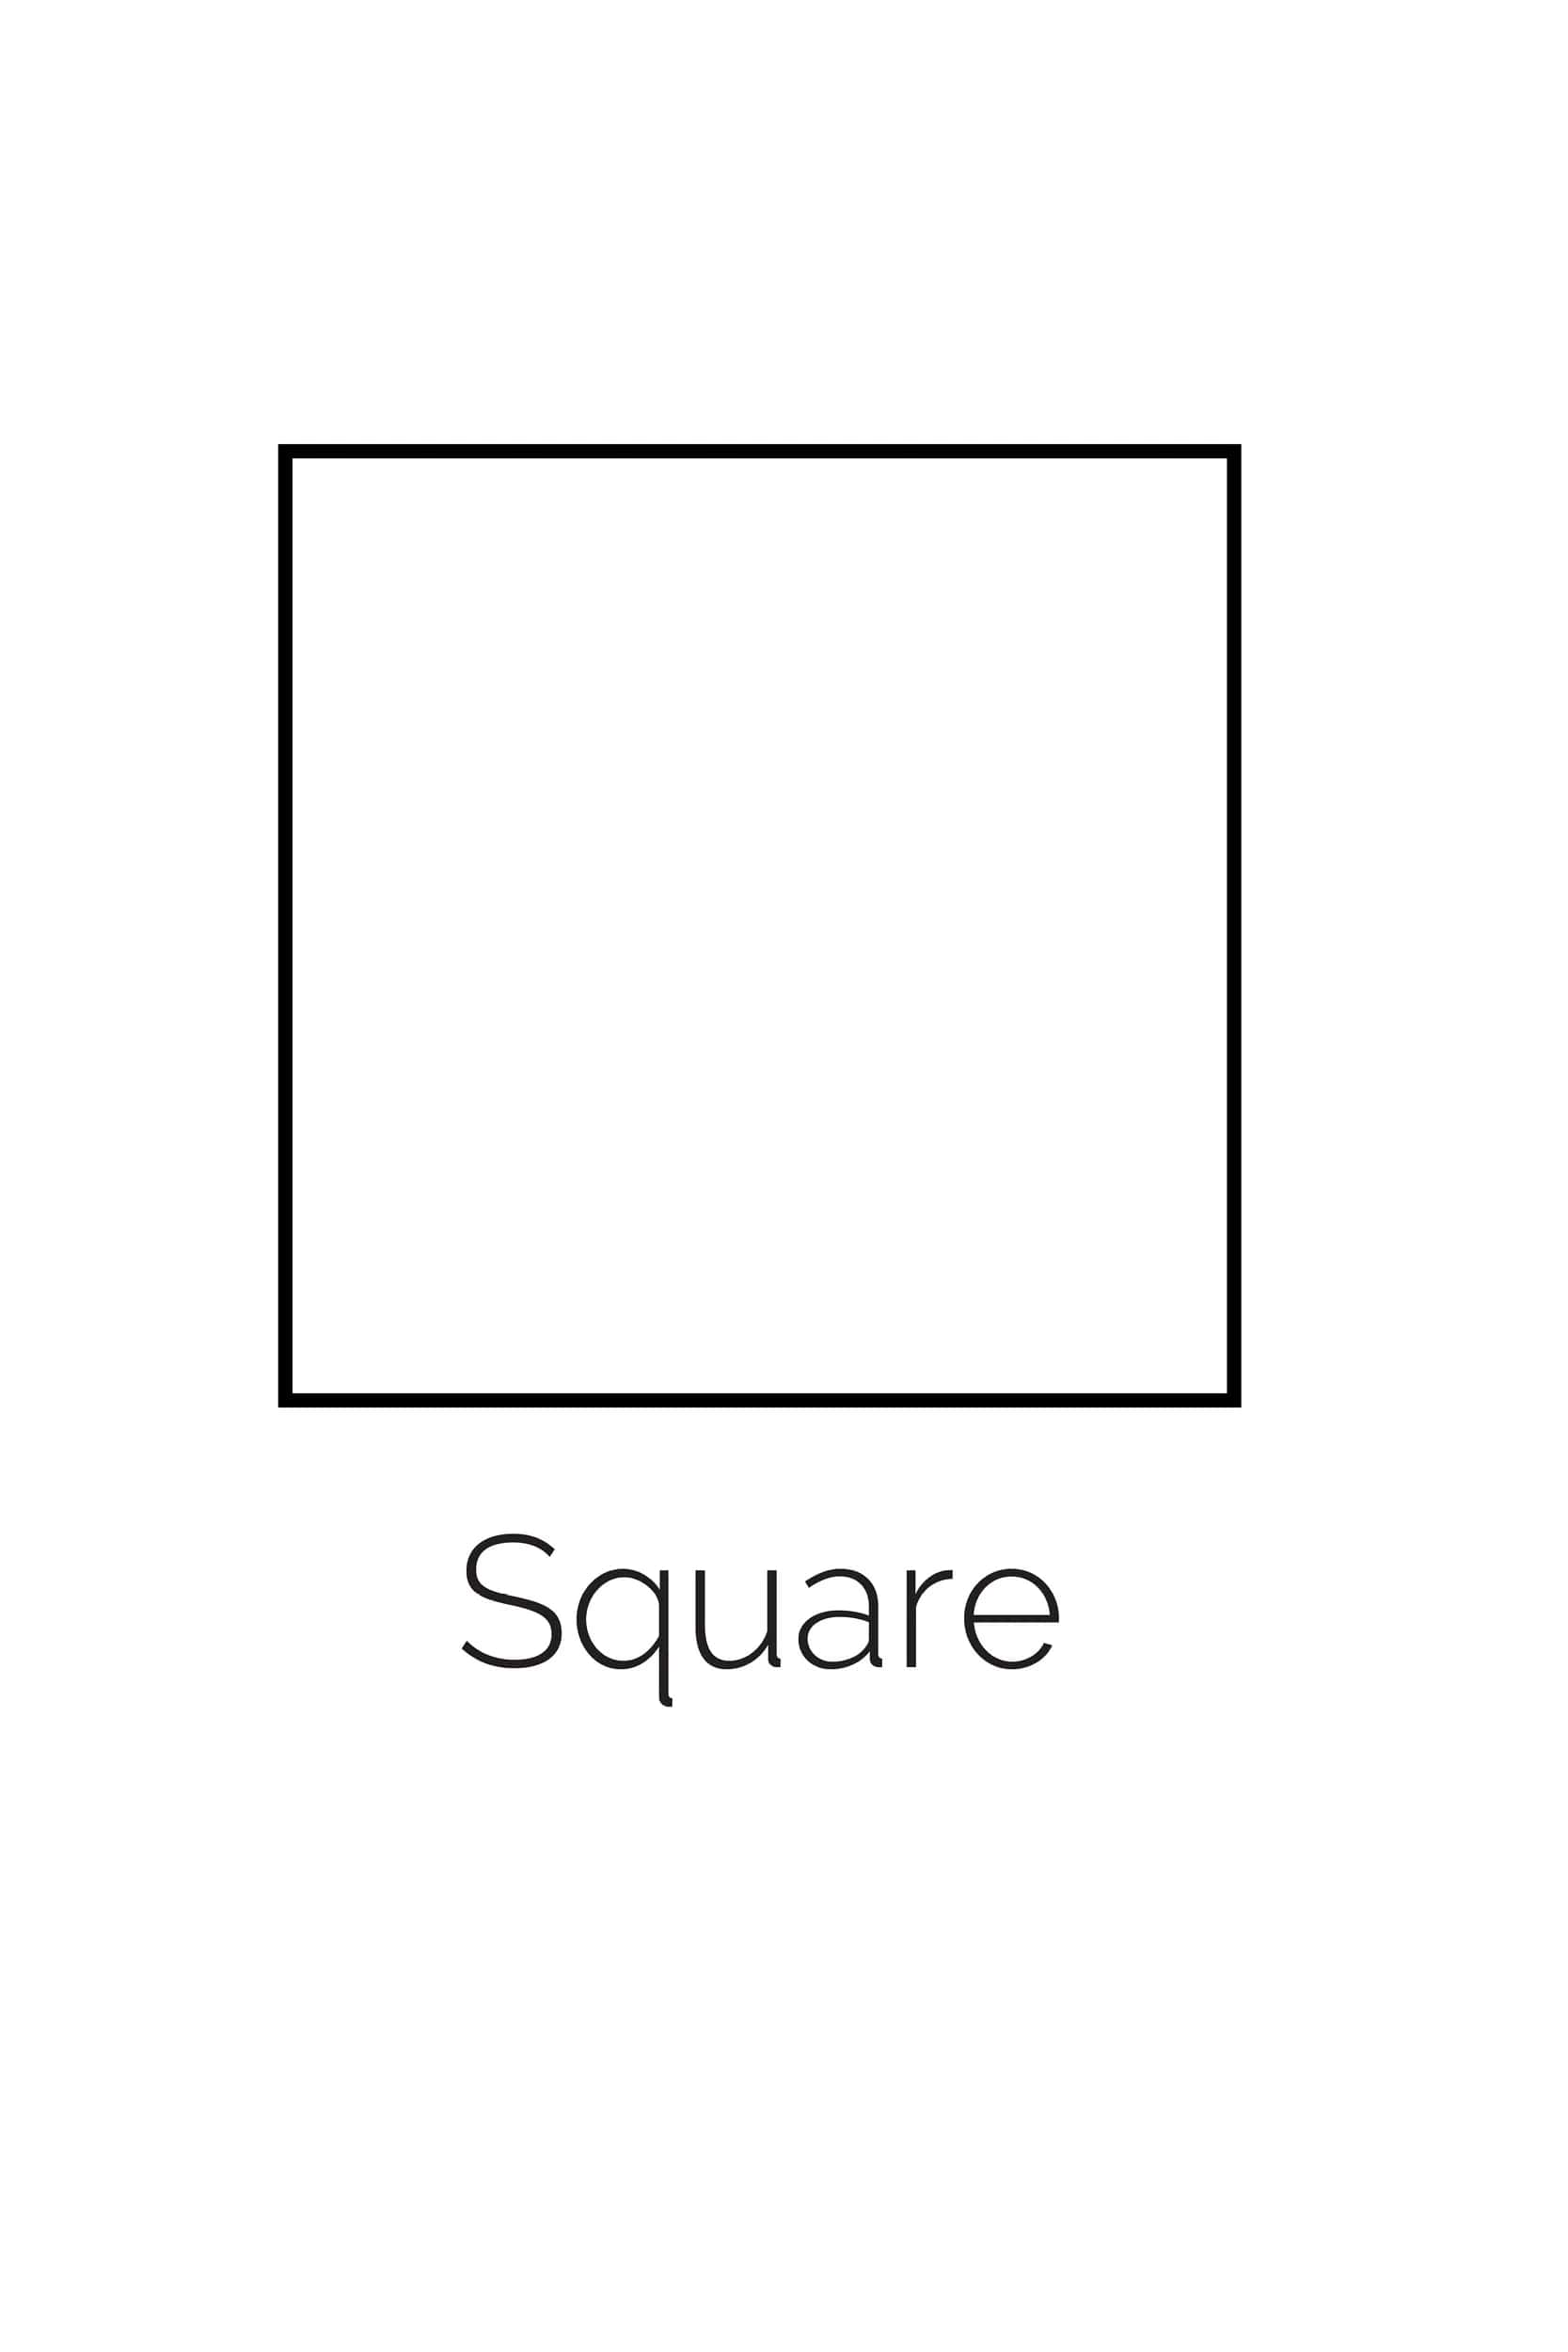 Printable Square Templates_29633